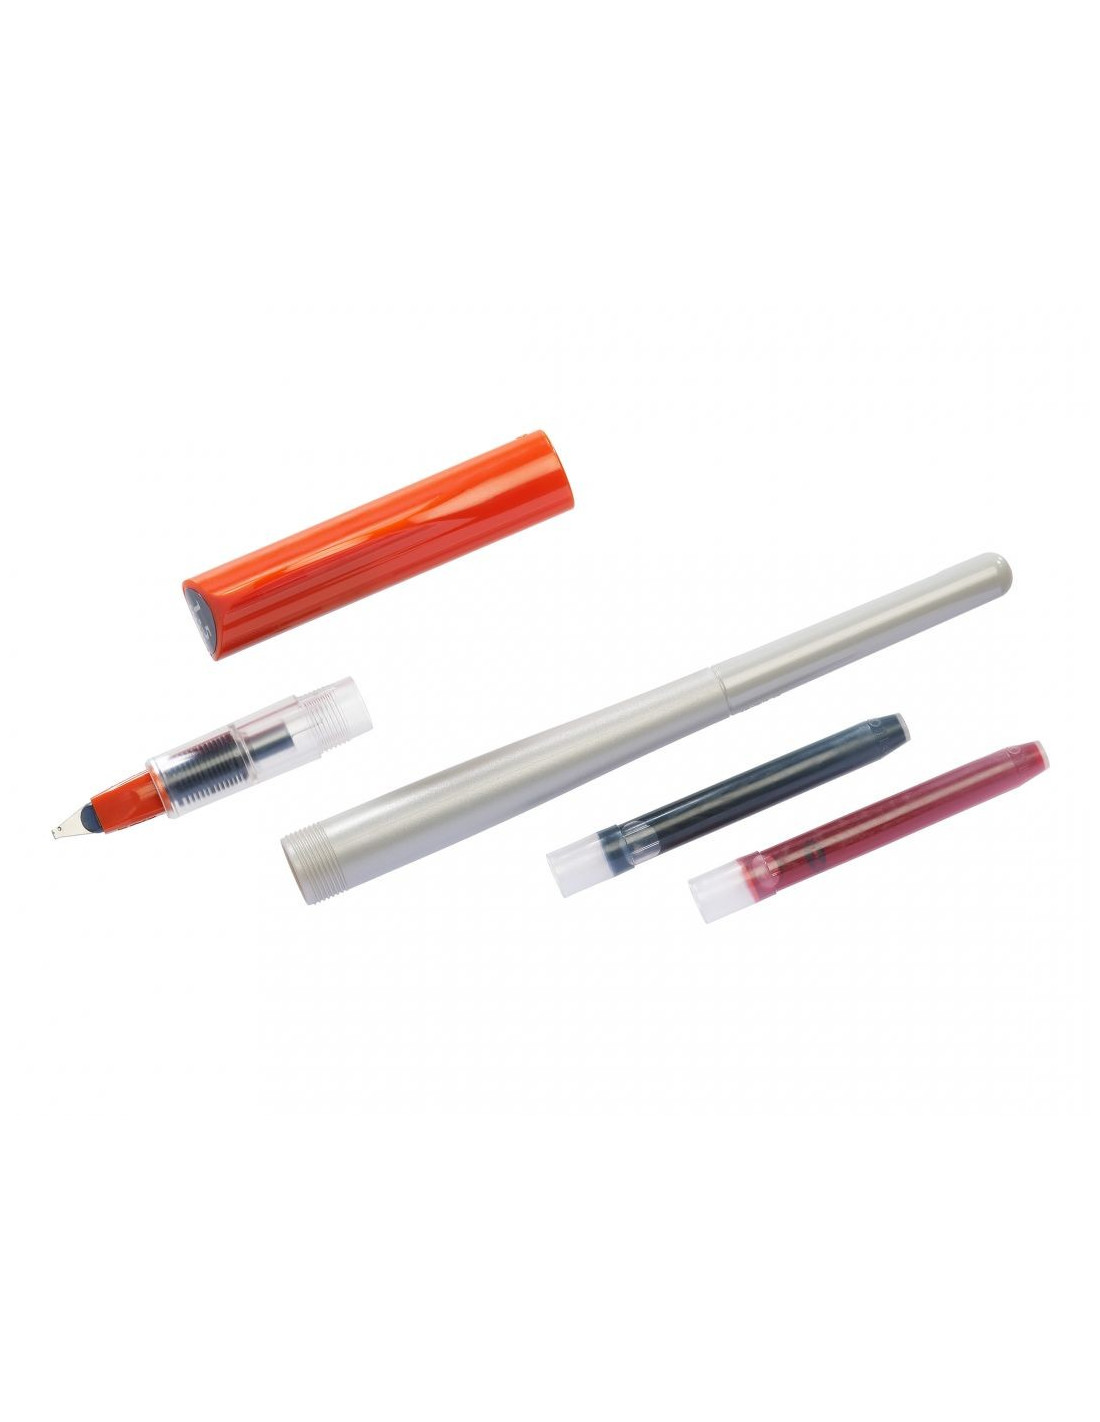 Stylo-plume pour calligraphie - Plume fine 1,5 mm - Parallel Pen